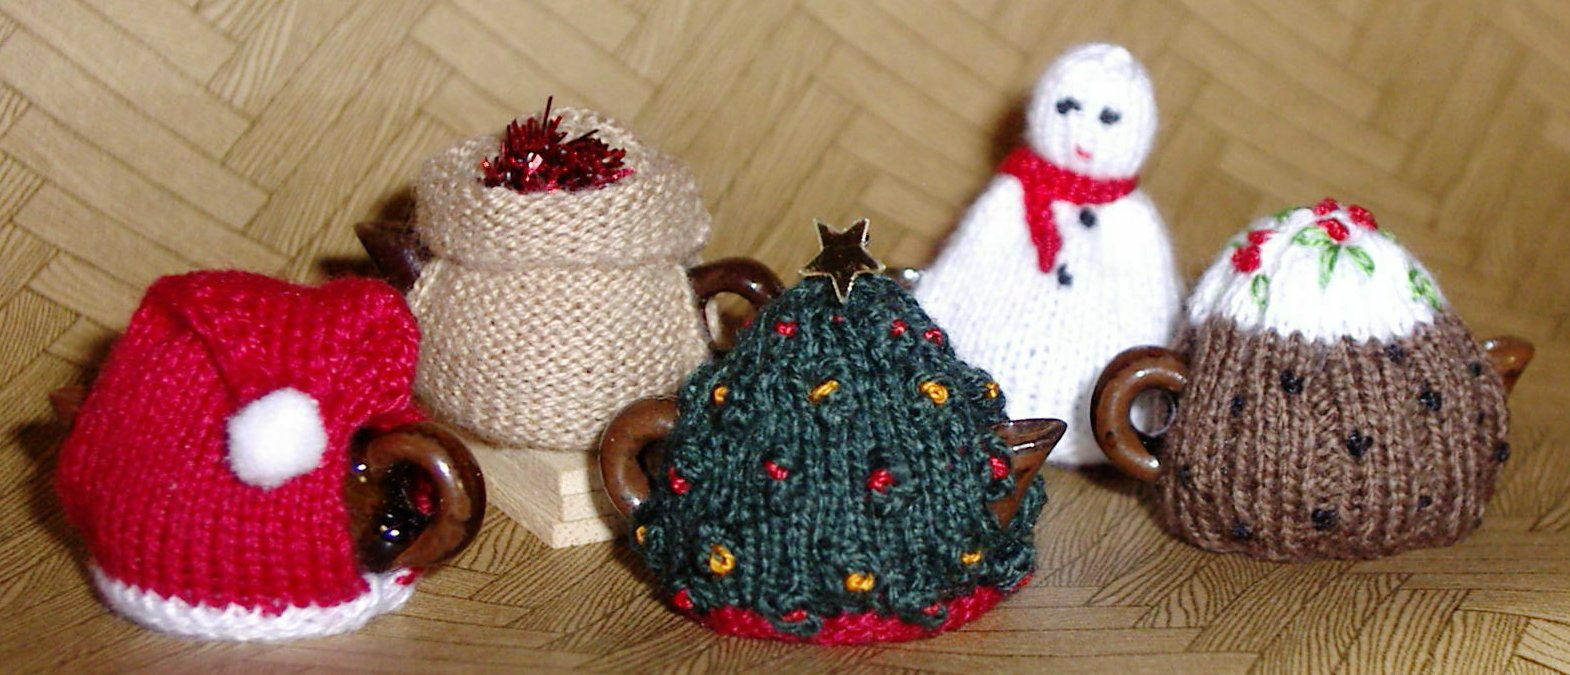 Tea Cosy Patterns To Knit Knitting Patterns For Tea Cosy Free Knitting Patterns